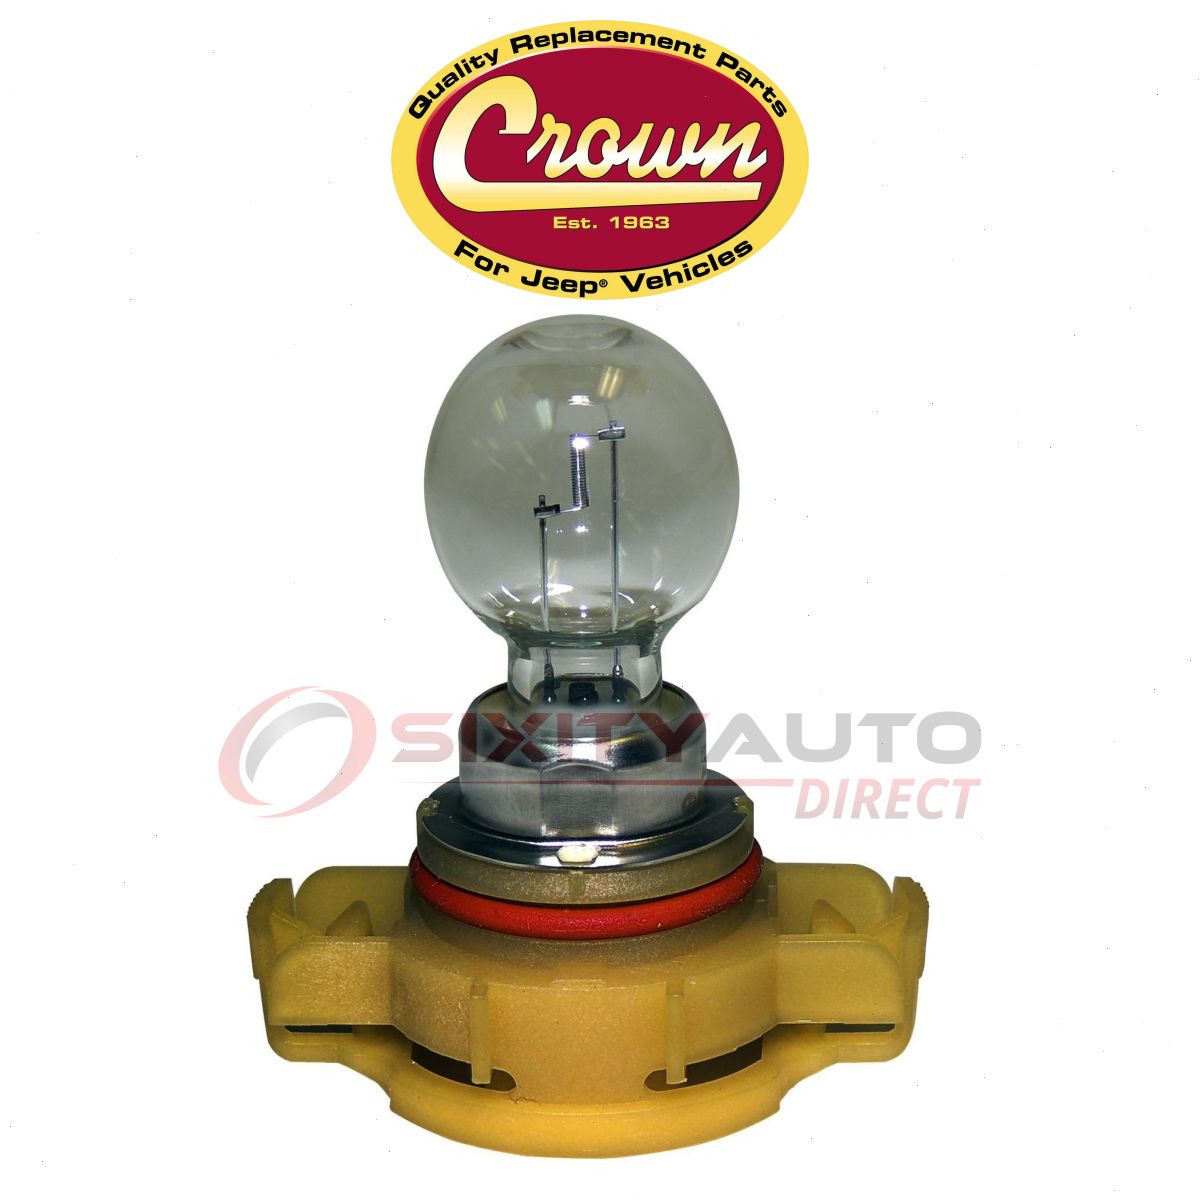 Crown Automotive Fog Light Bulb for 2010-2016 Chrysler Town & Country - bl | eBay 2010 Chrysler Town And Country Fog Light Bulb Replacement